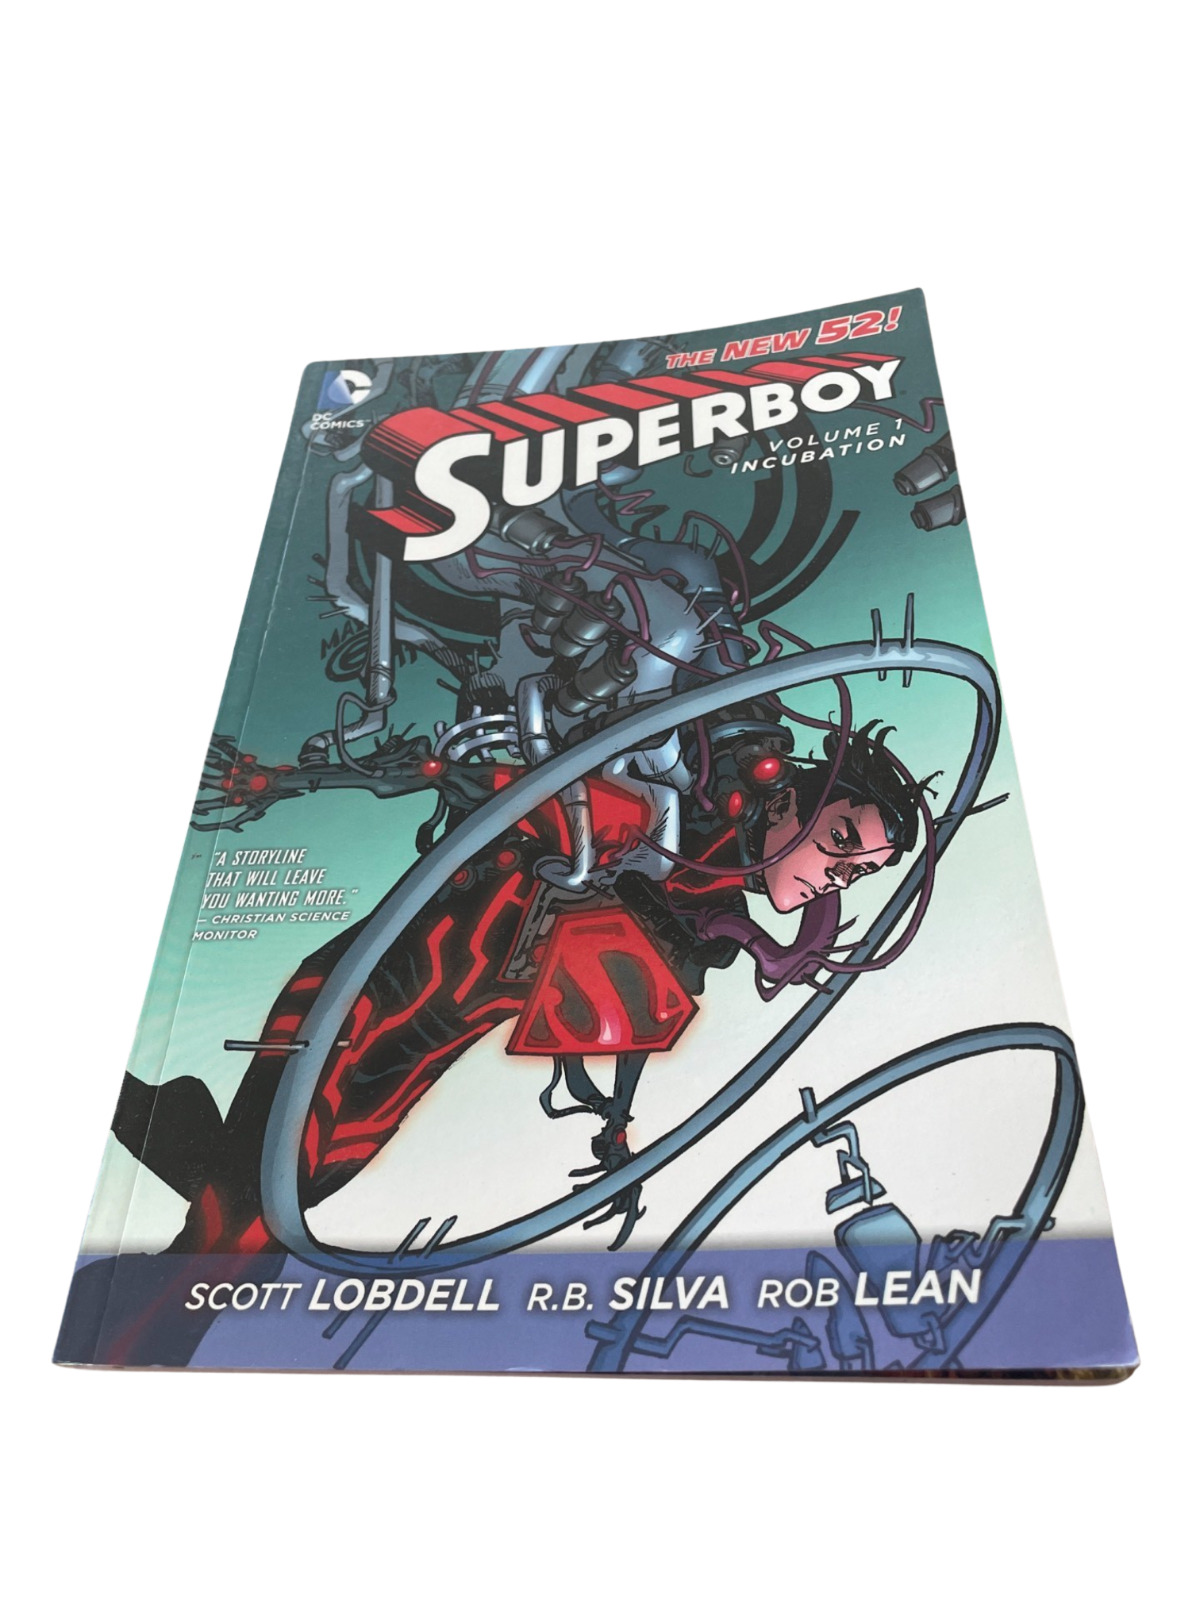 Superboy: Incubation Vol. 1 by Tom DeFalco and Scott Lobdell (2012, Paperback)